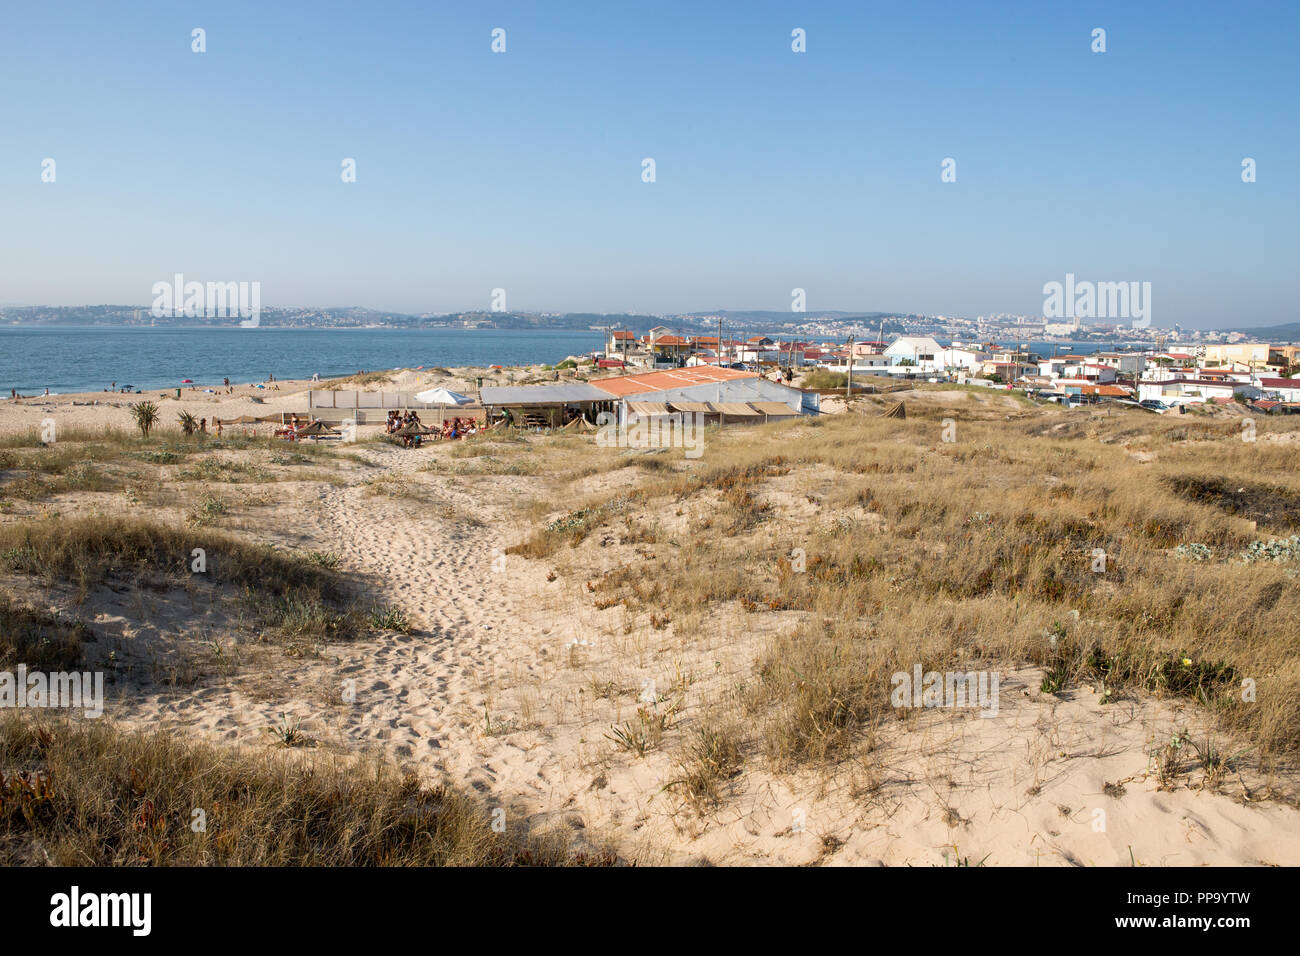 Portugal beach, Cova do Vapor. People Stock Photo